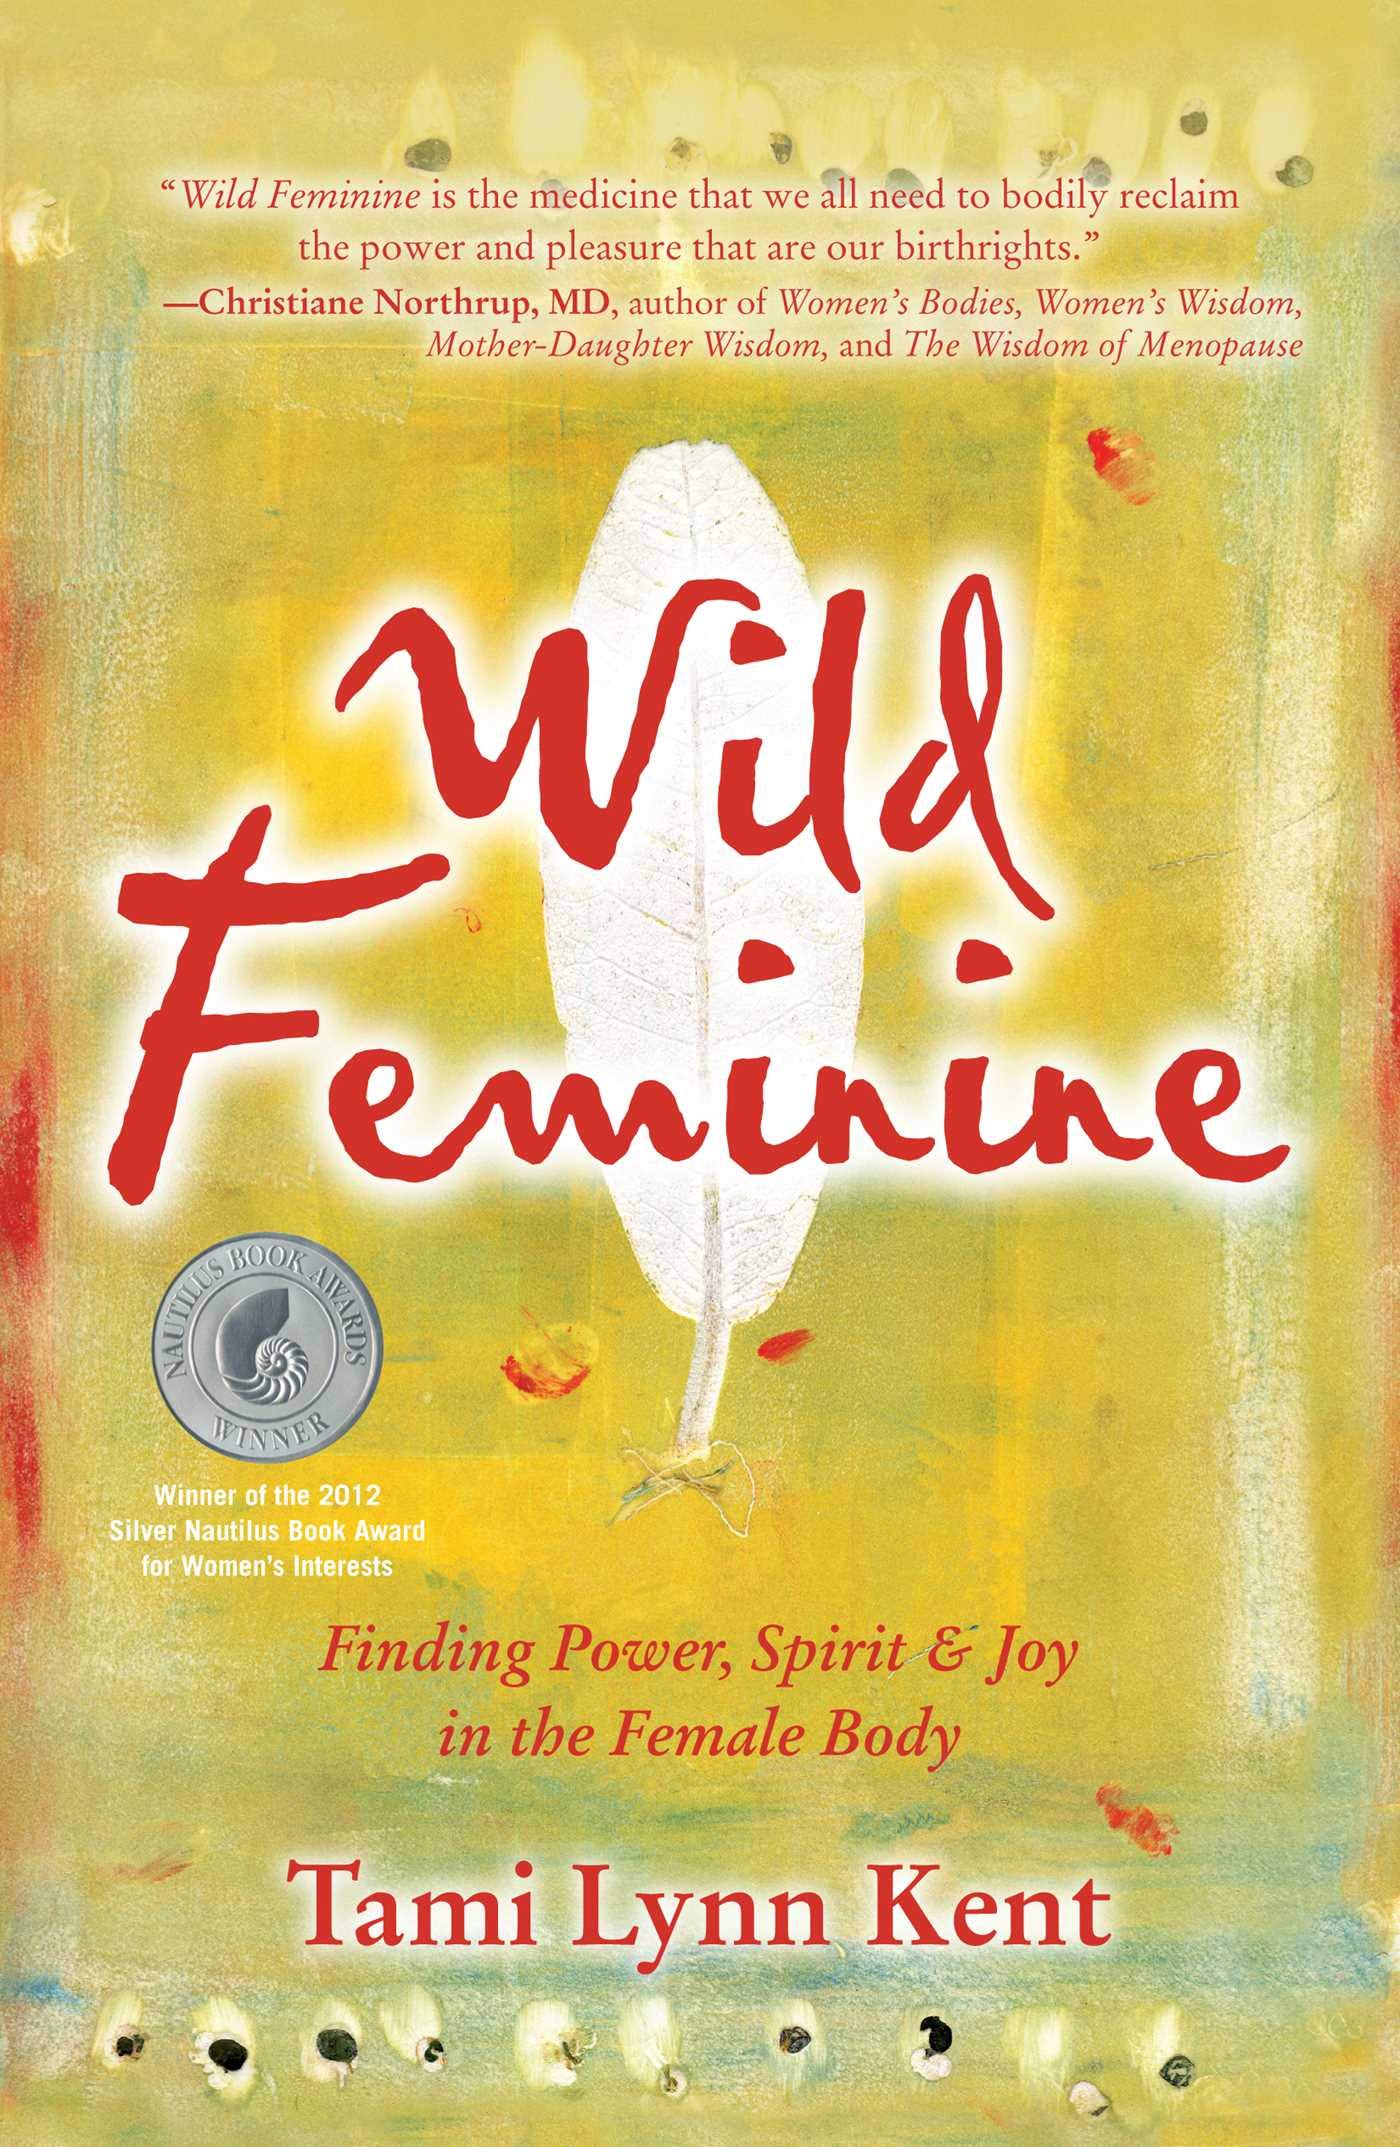 Book cover of Wild Feminine by Tami Lynn Kent, showcasing vibrant floral design